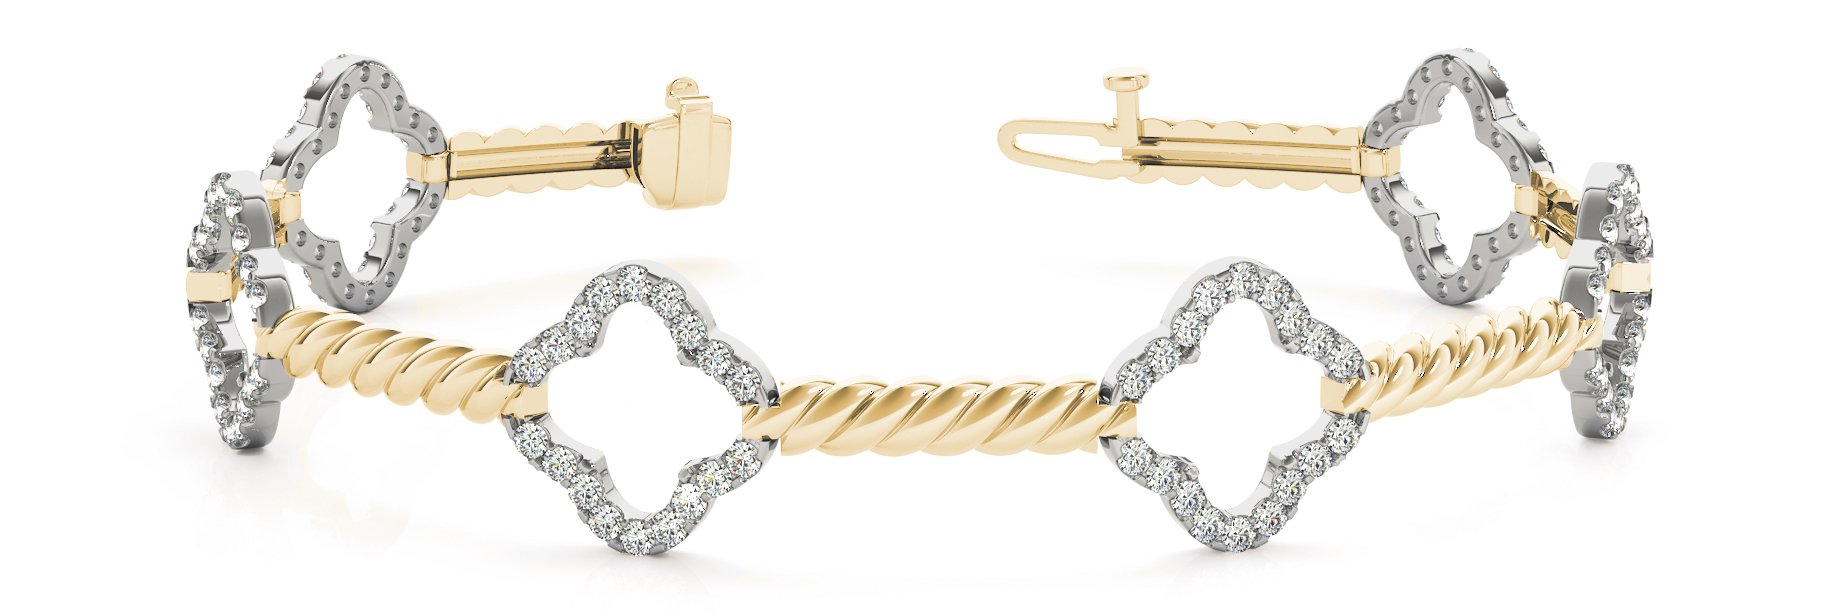 Fancy Diamond Bracelet Ladies 1.24ct tw - 14kt Yellow Gold